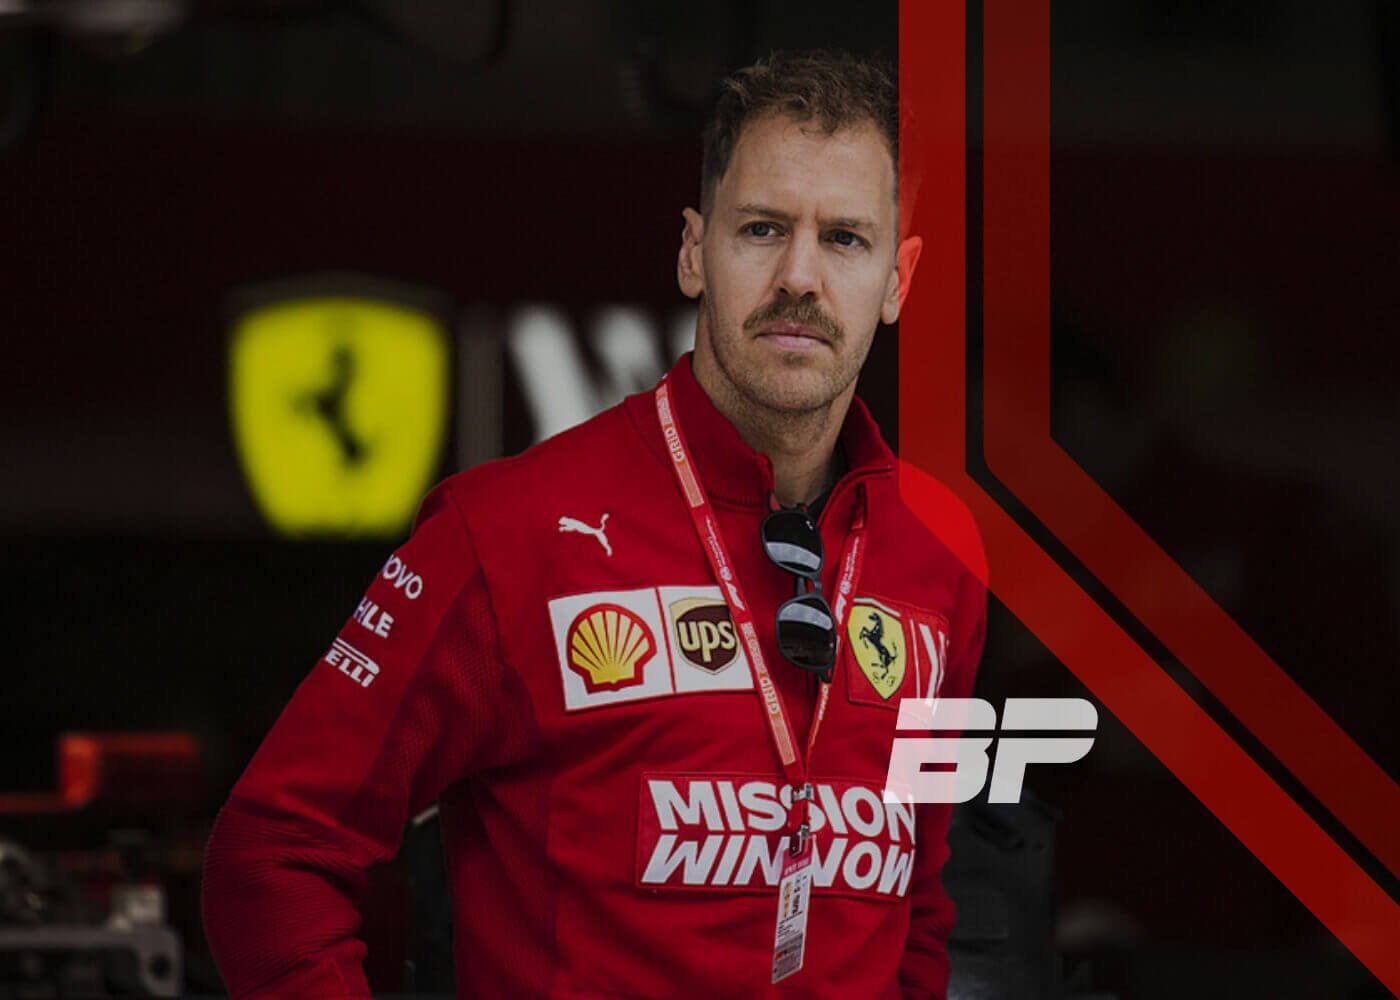 Foto de TL1 China – Sebastian Vettel lidera sessão com duelo de pneus